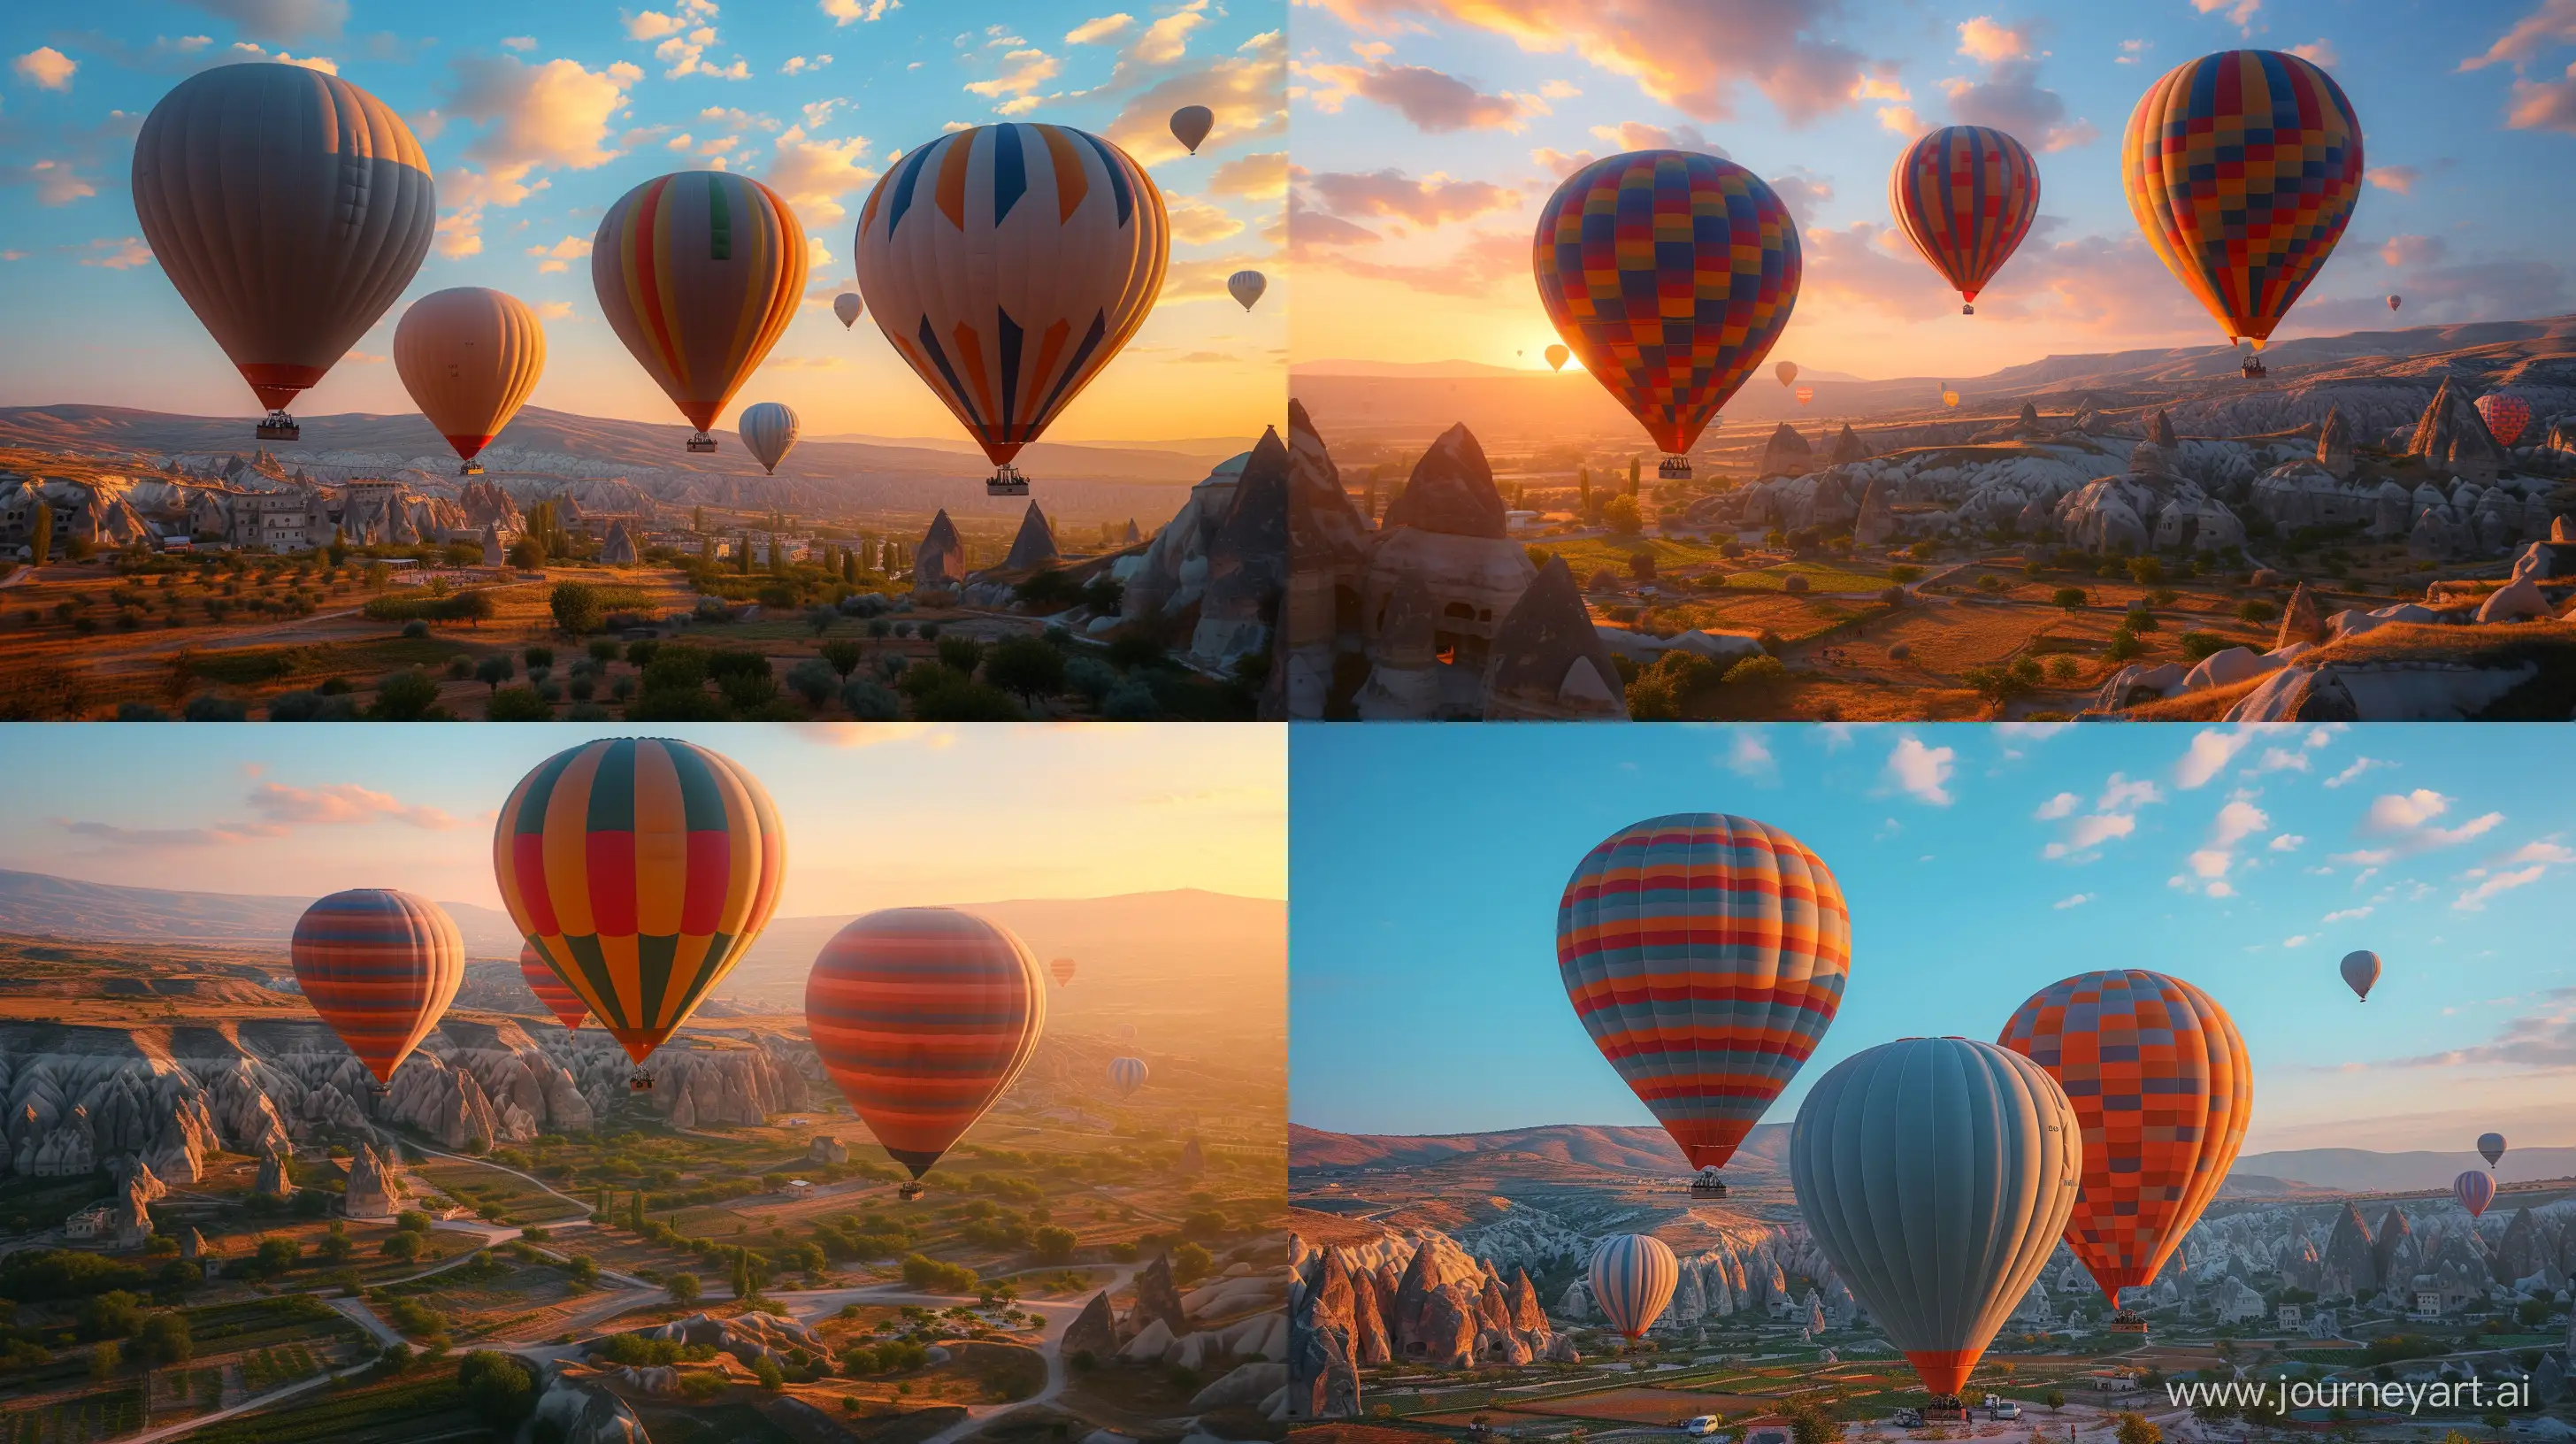 Balloon-Festival-in-Cappadocia-A-Photorealistic-Spectacle